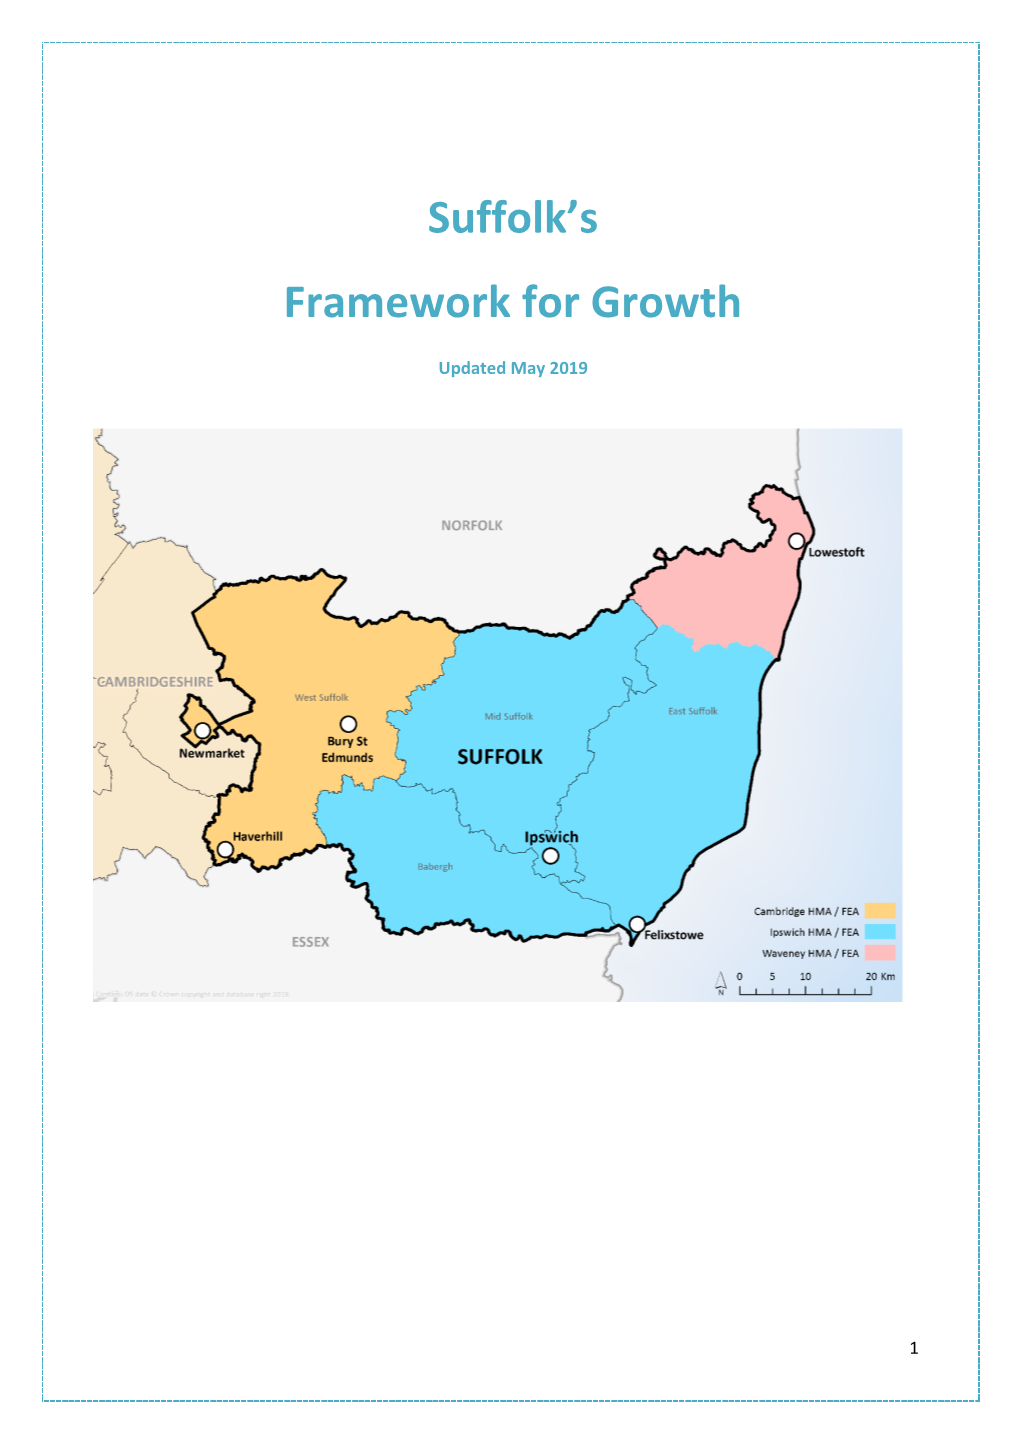 Suffolk's Framework for Growth